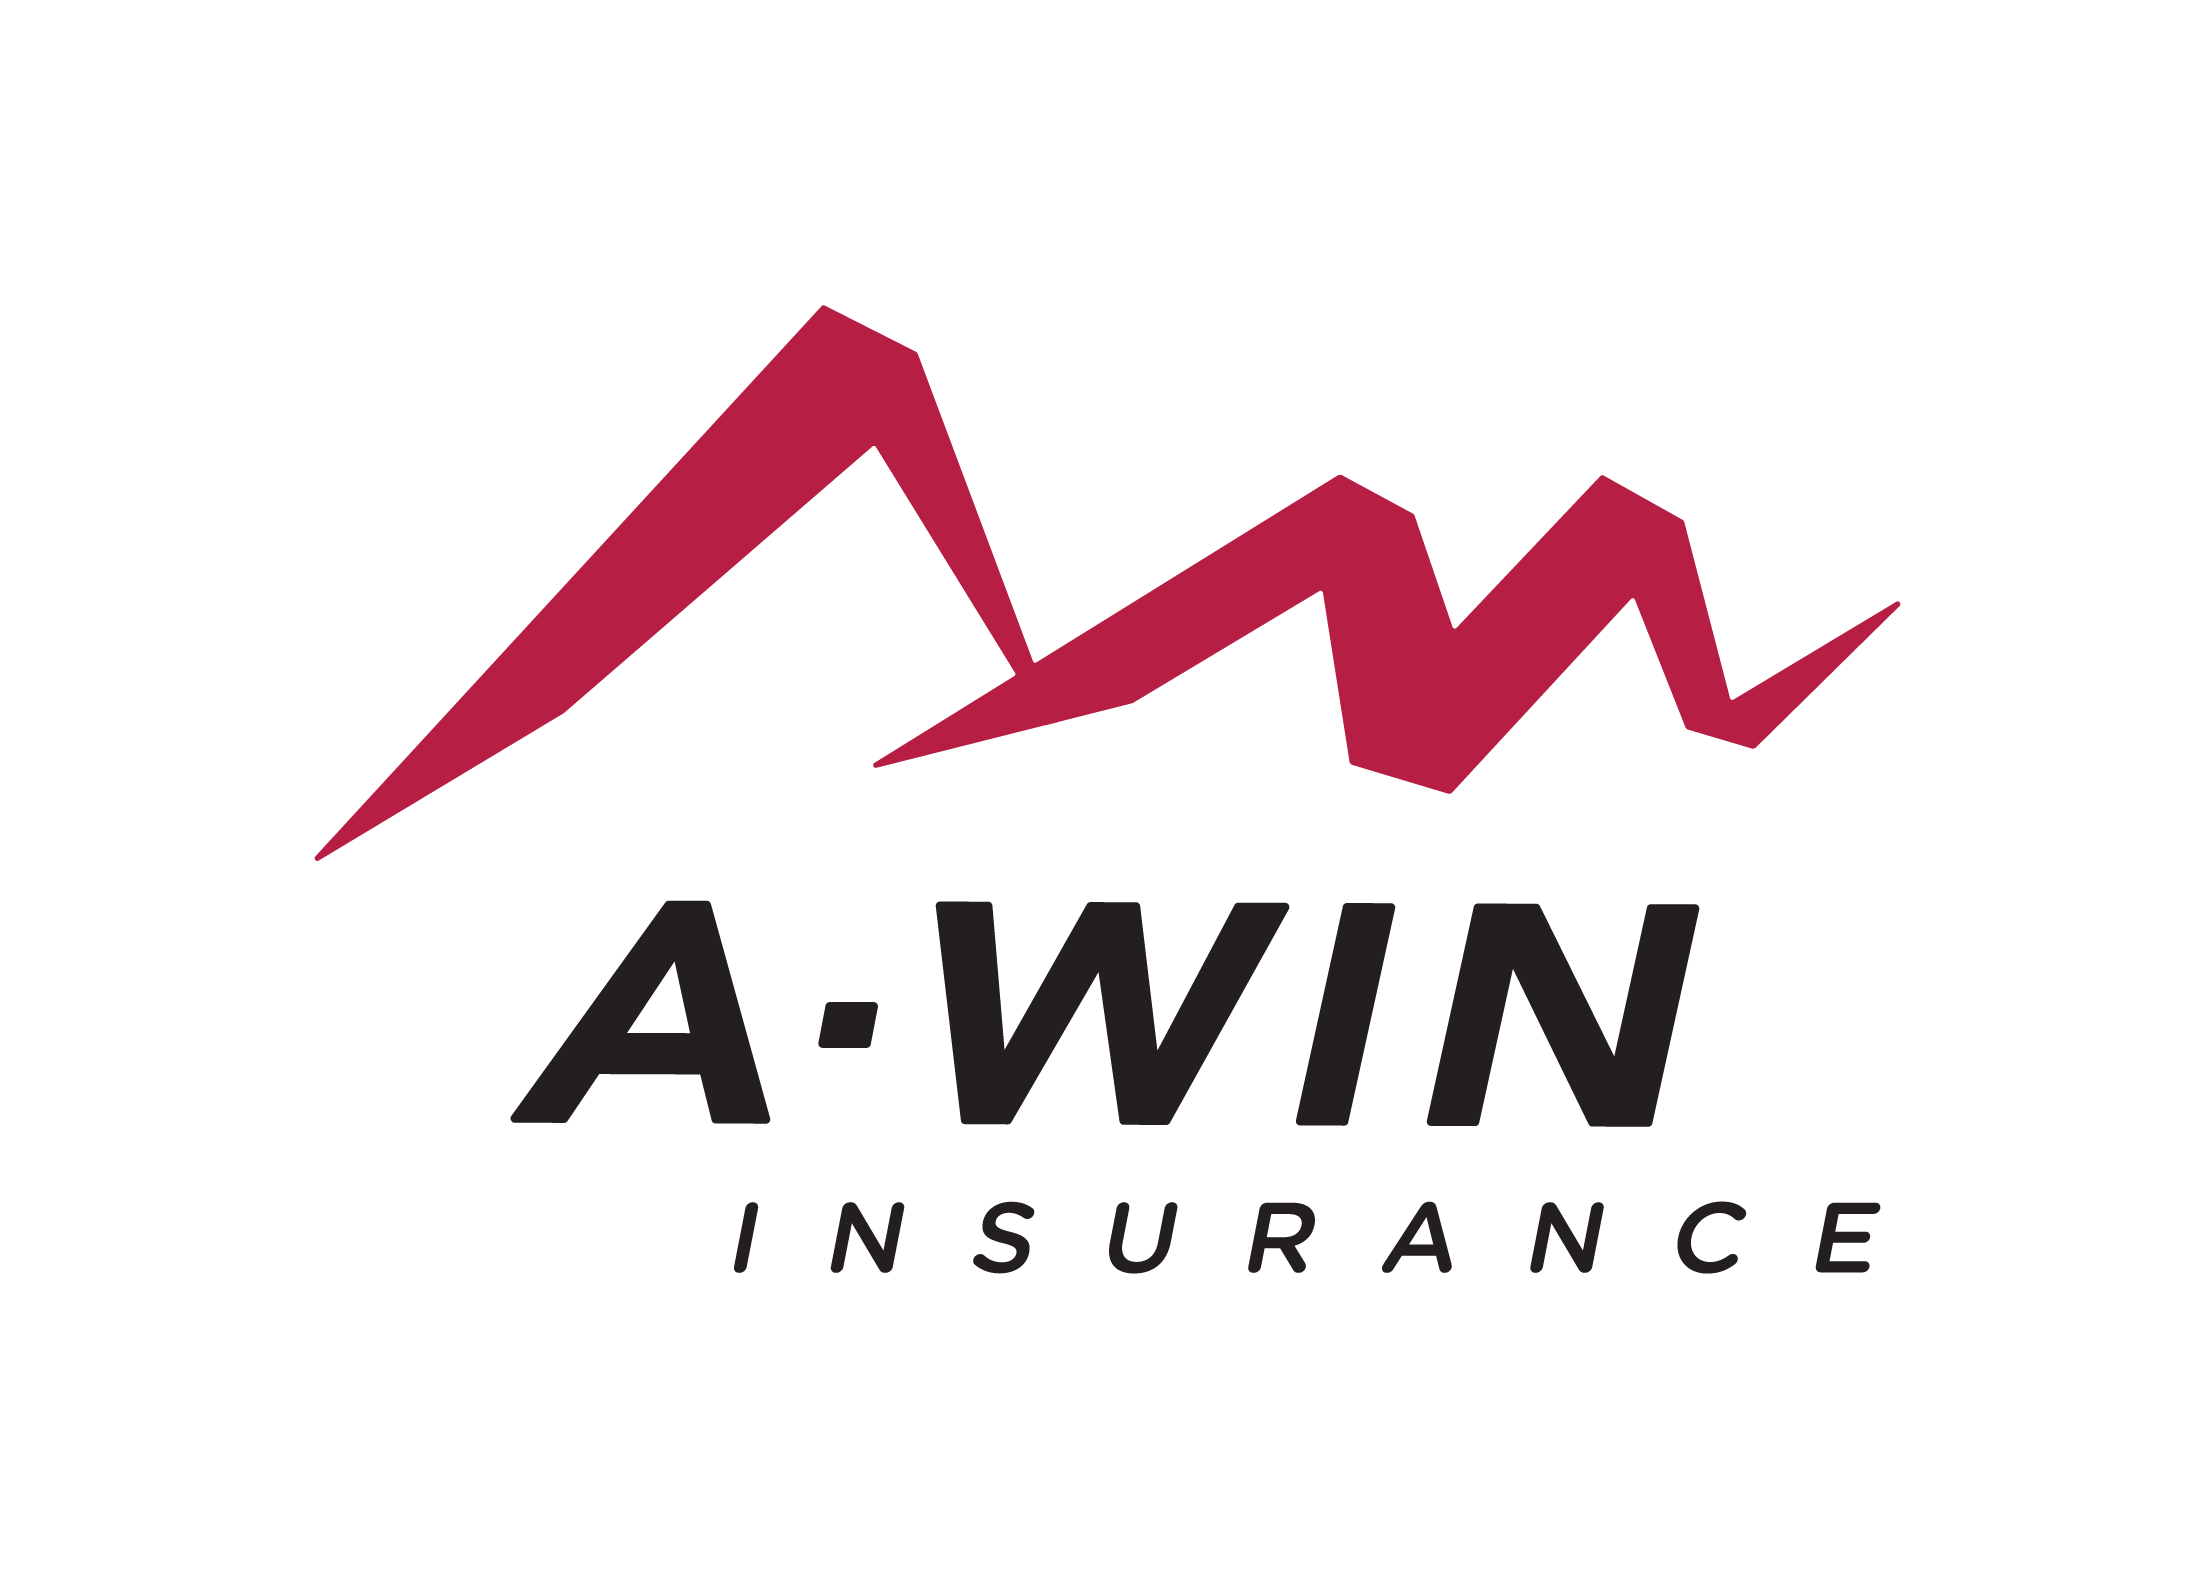 A-WIN Insurance